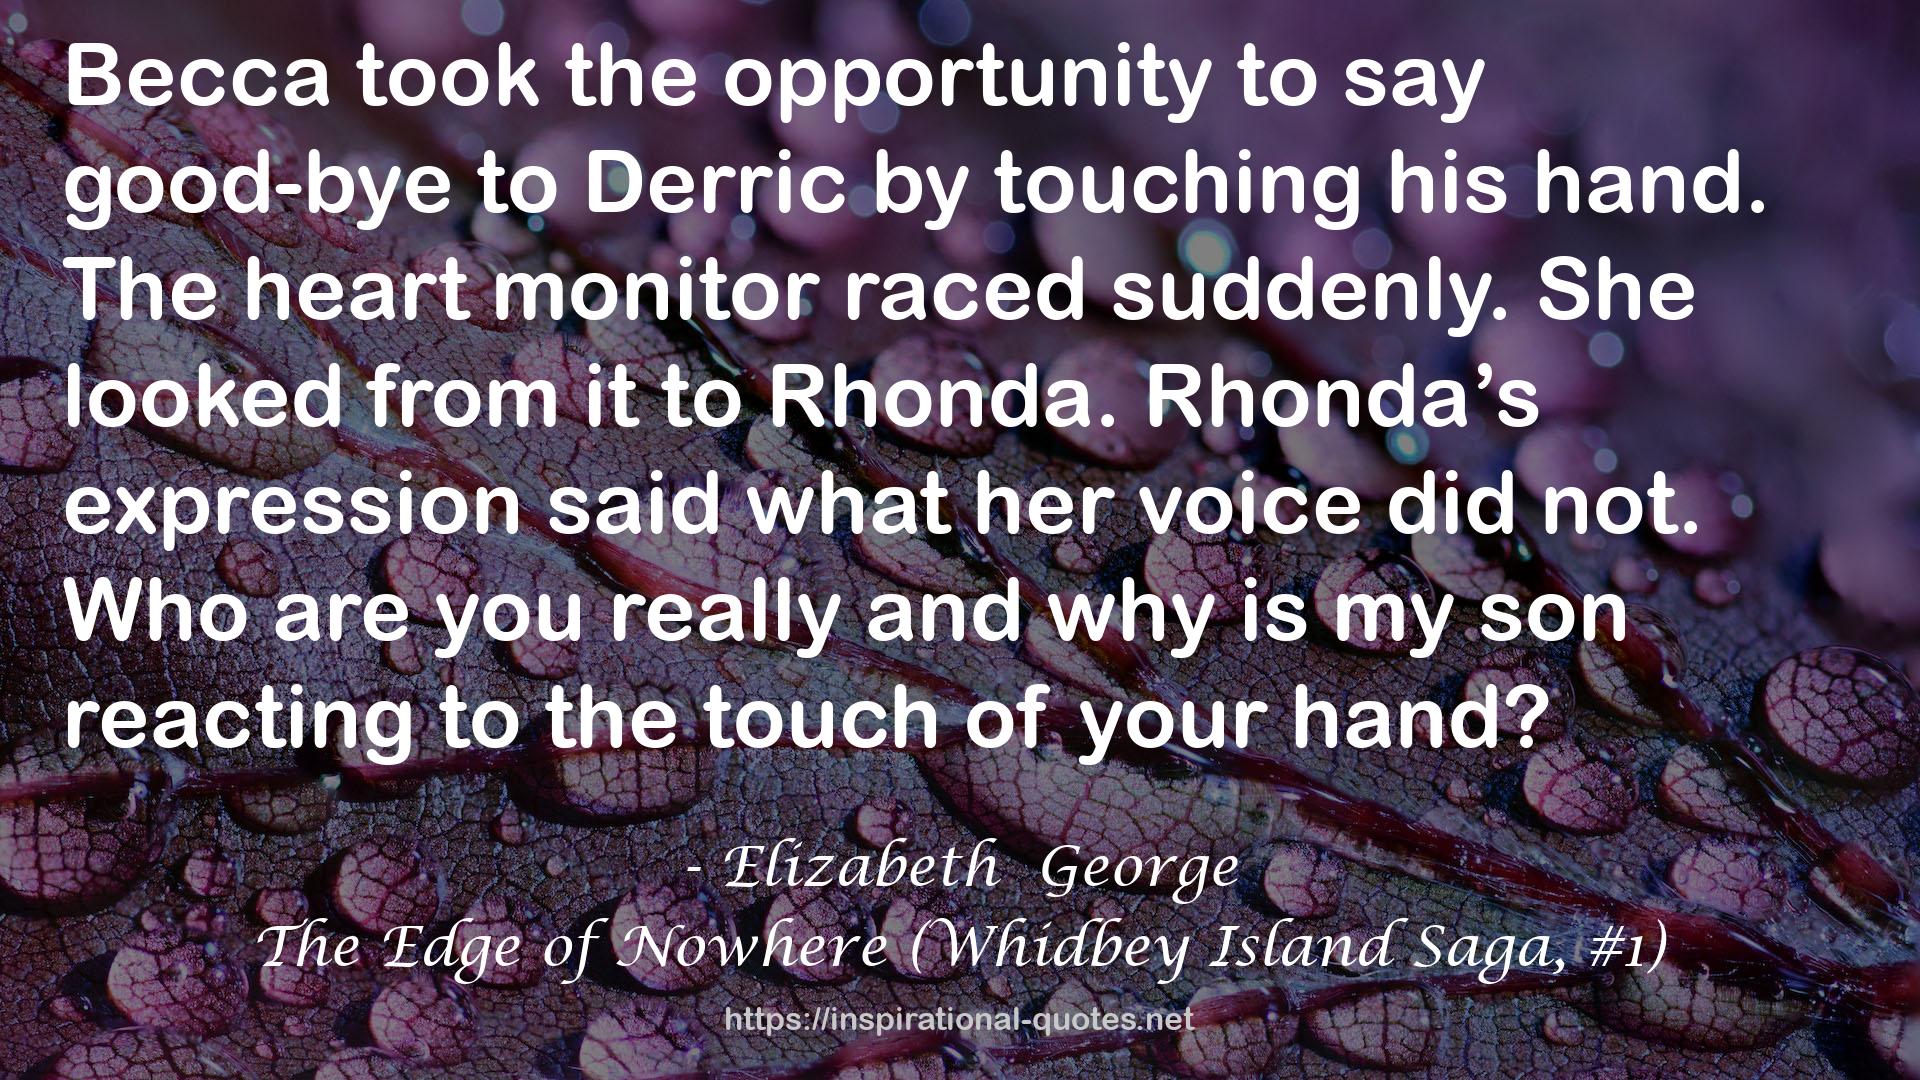 The Edge of Nowhere (Whidbey Island Saga, #1) QUOTES